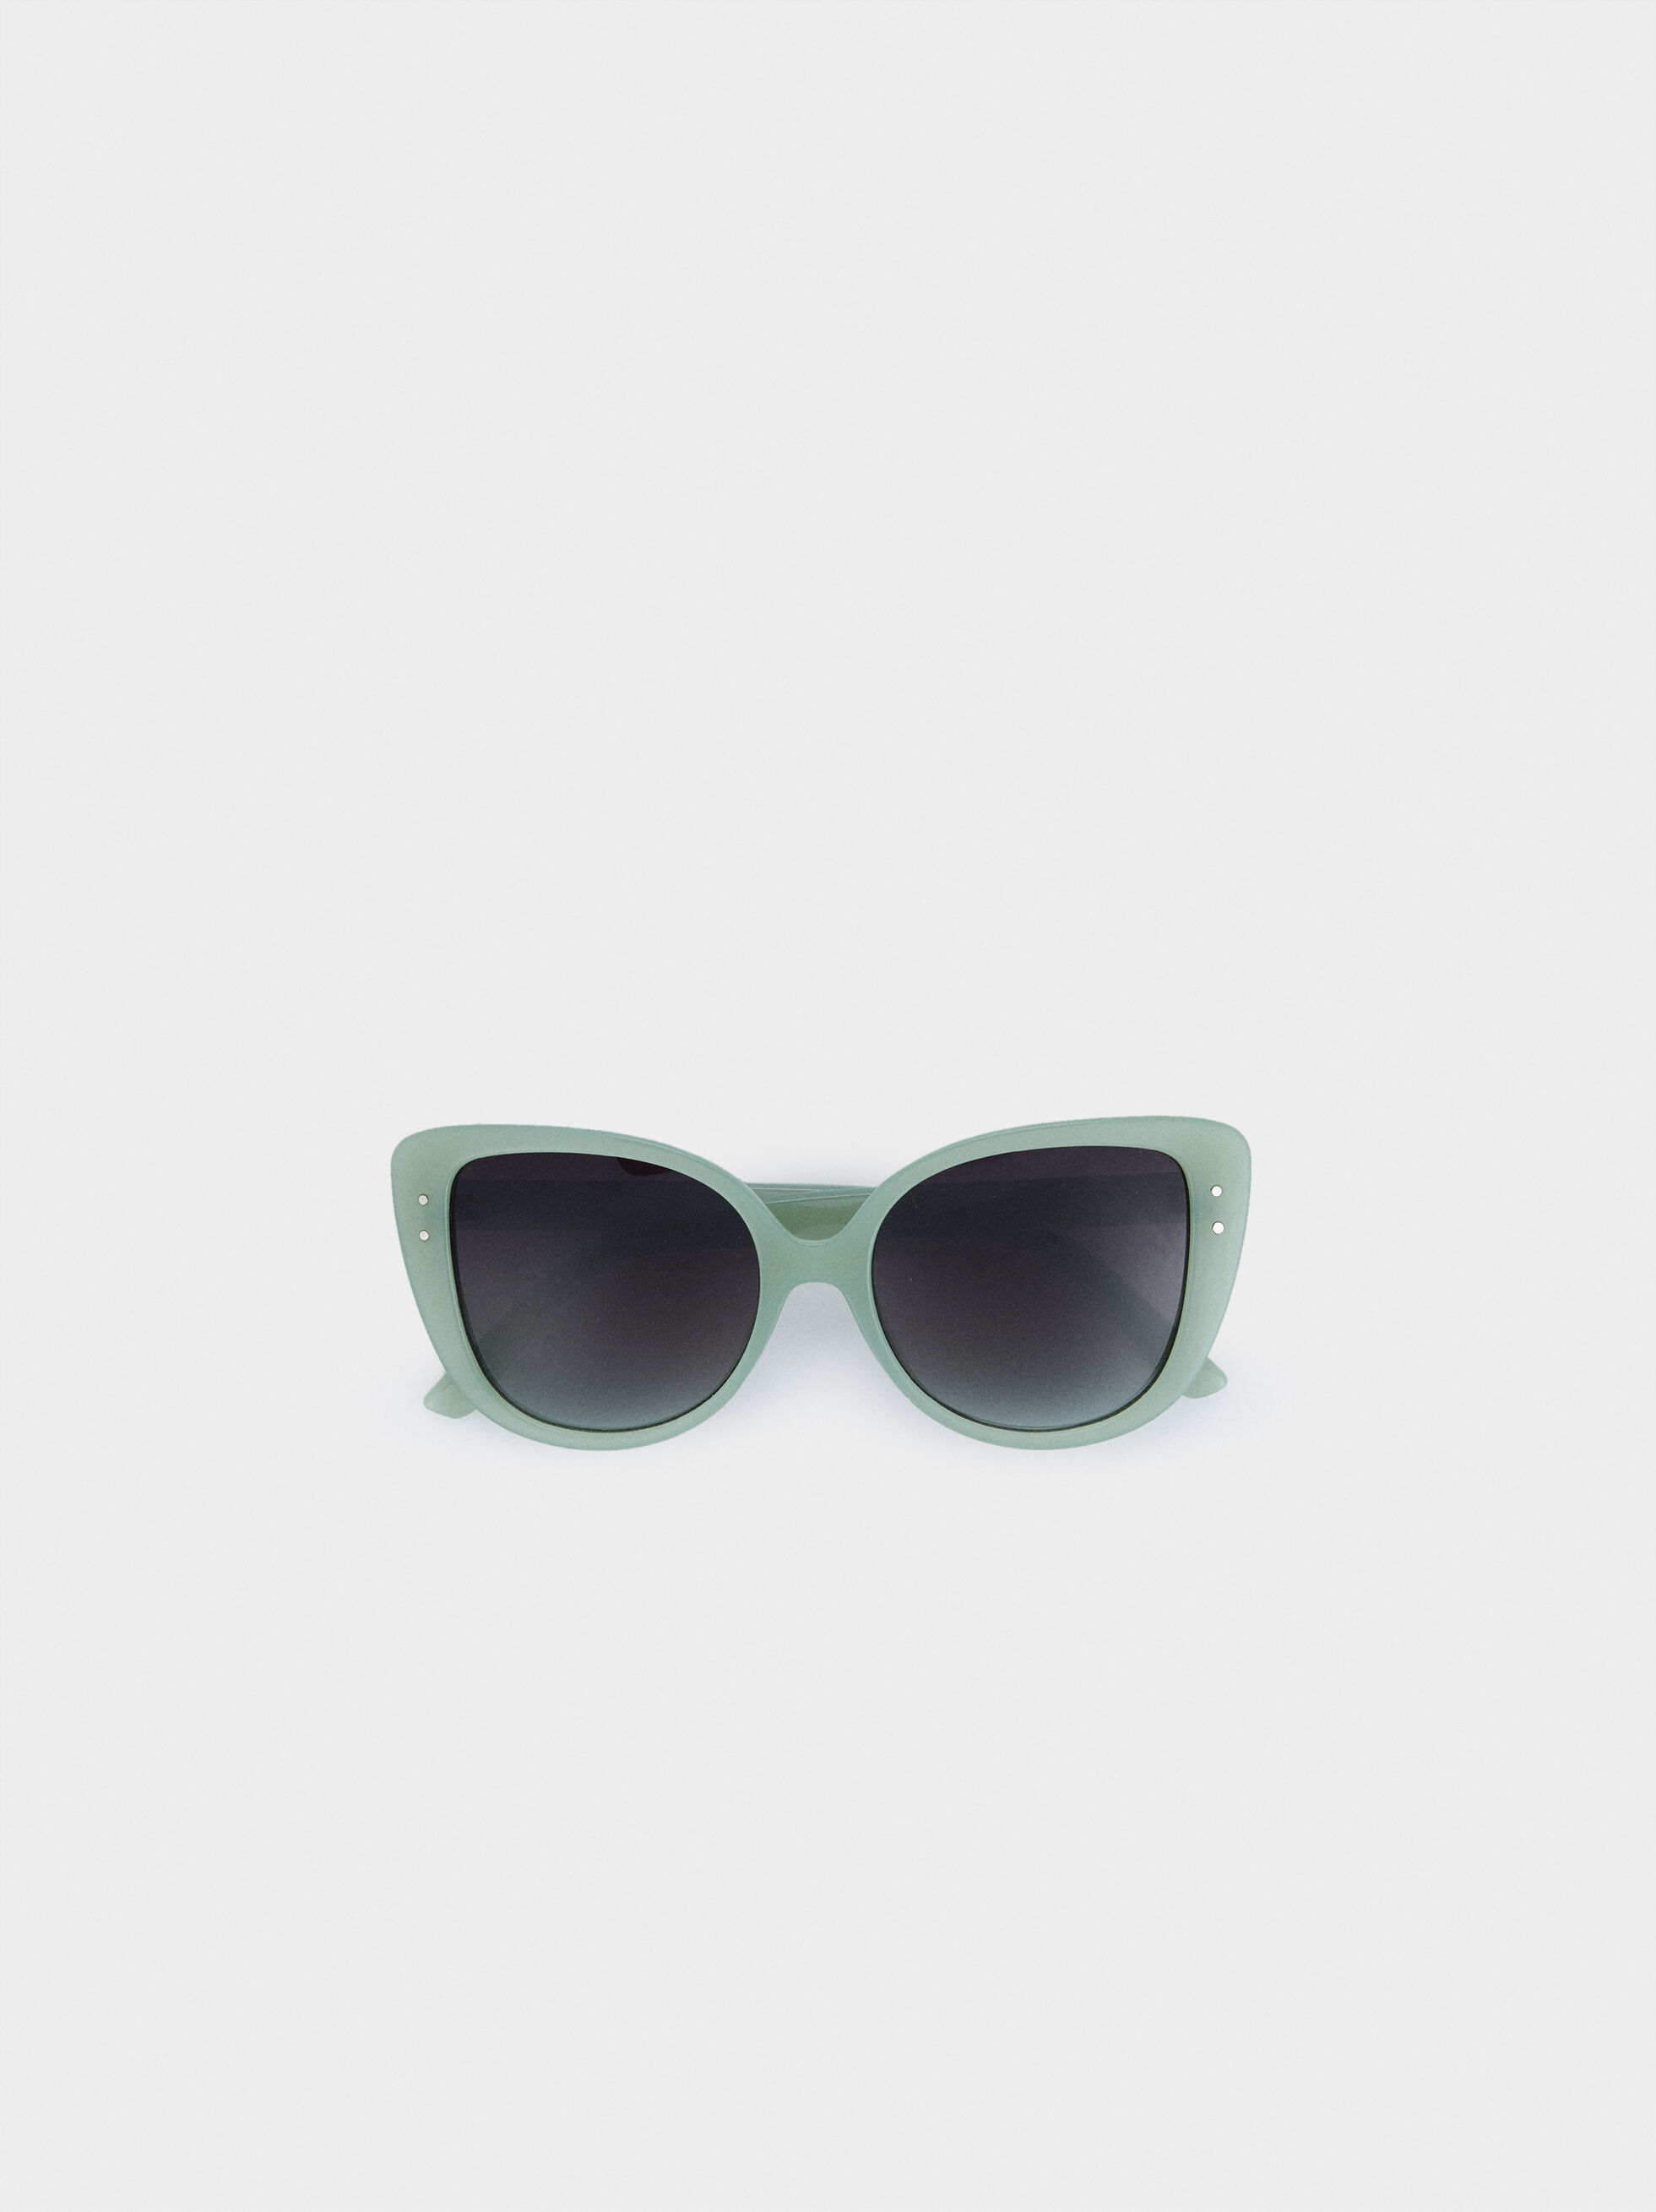 round sunglasses plastic frame